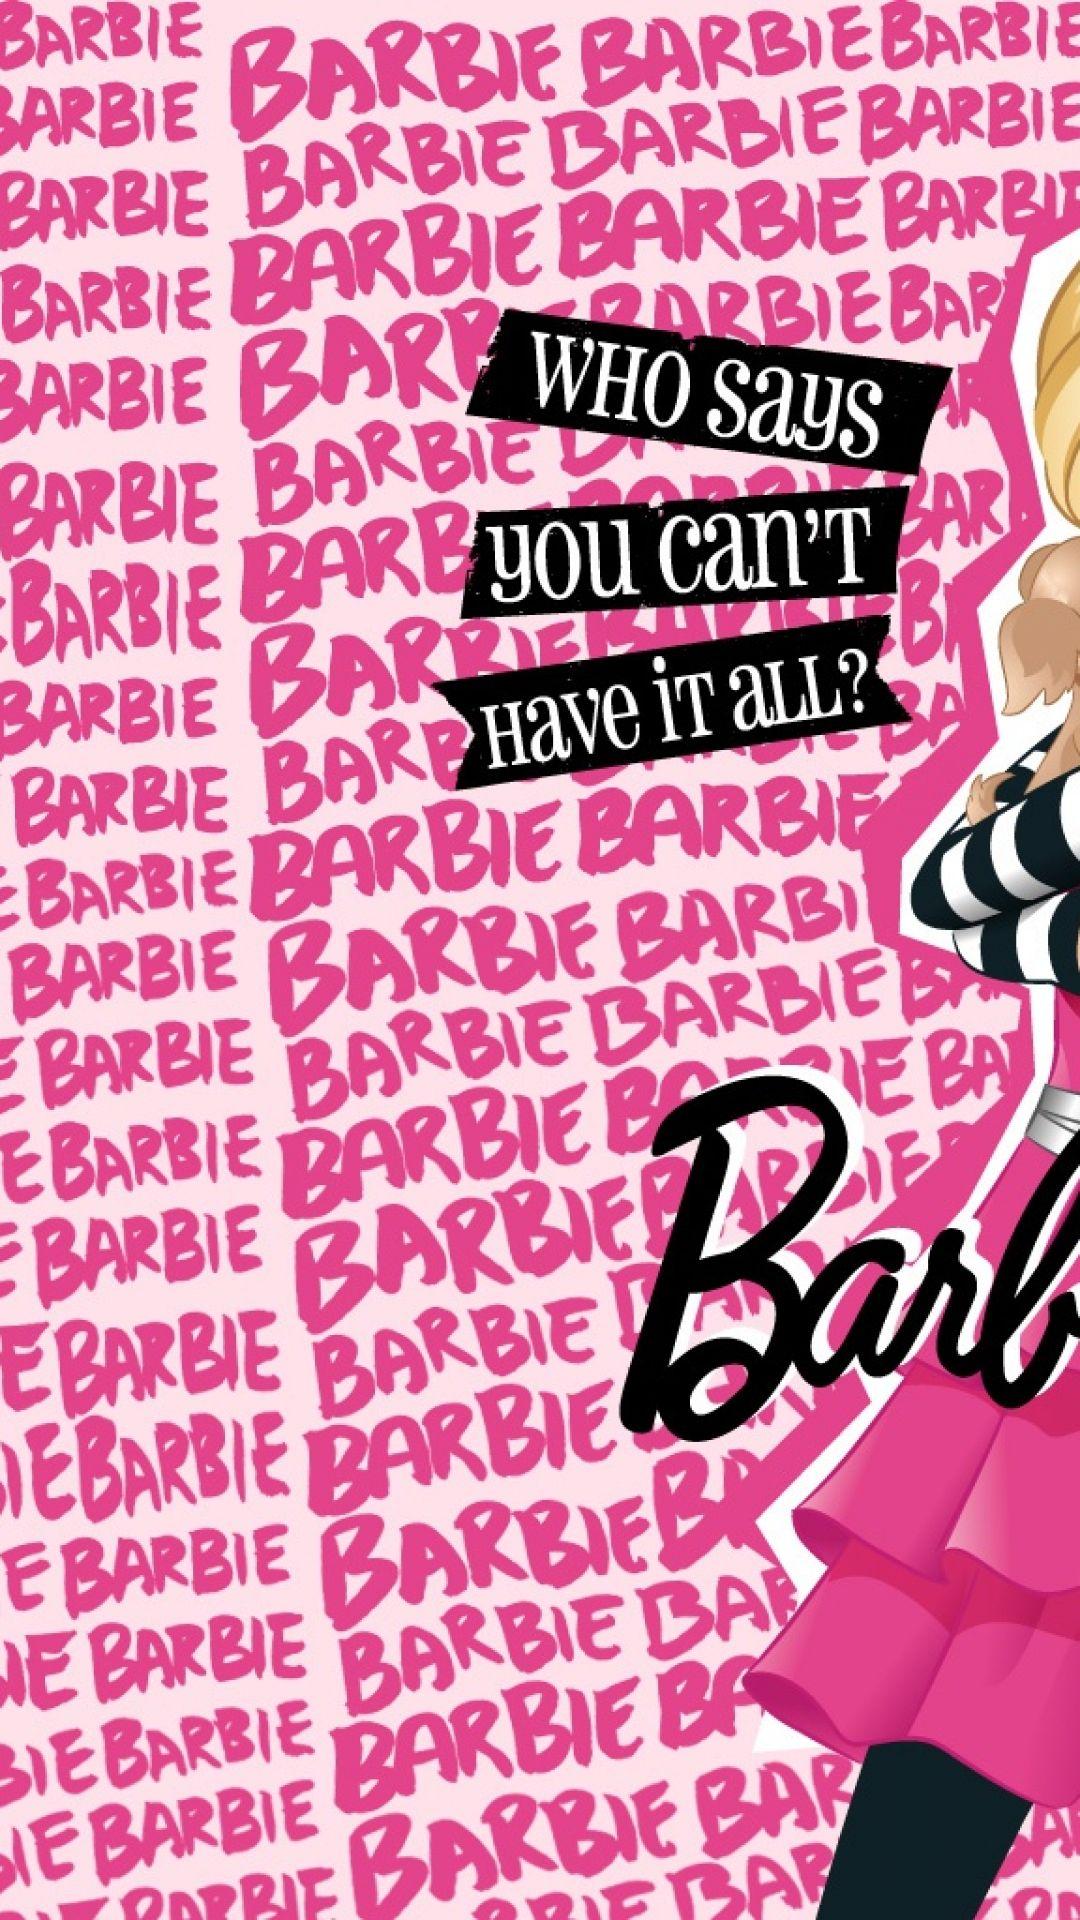 Barbie Wallpaper Iphone : Barbie iPhone wallpaper | iPhone | Pinterest